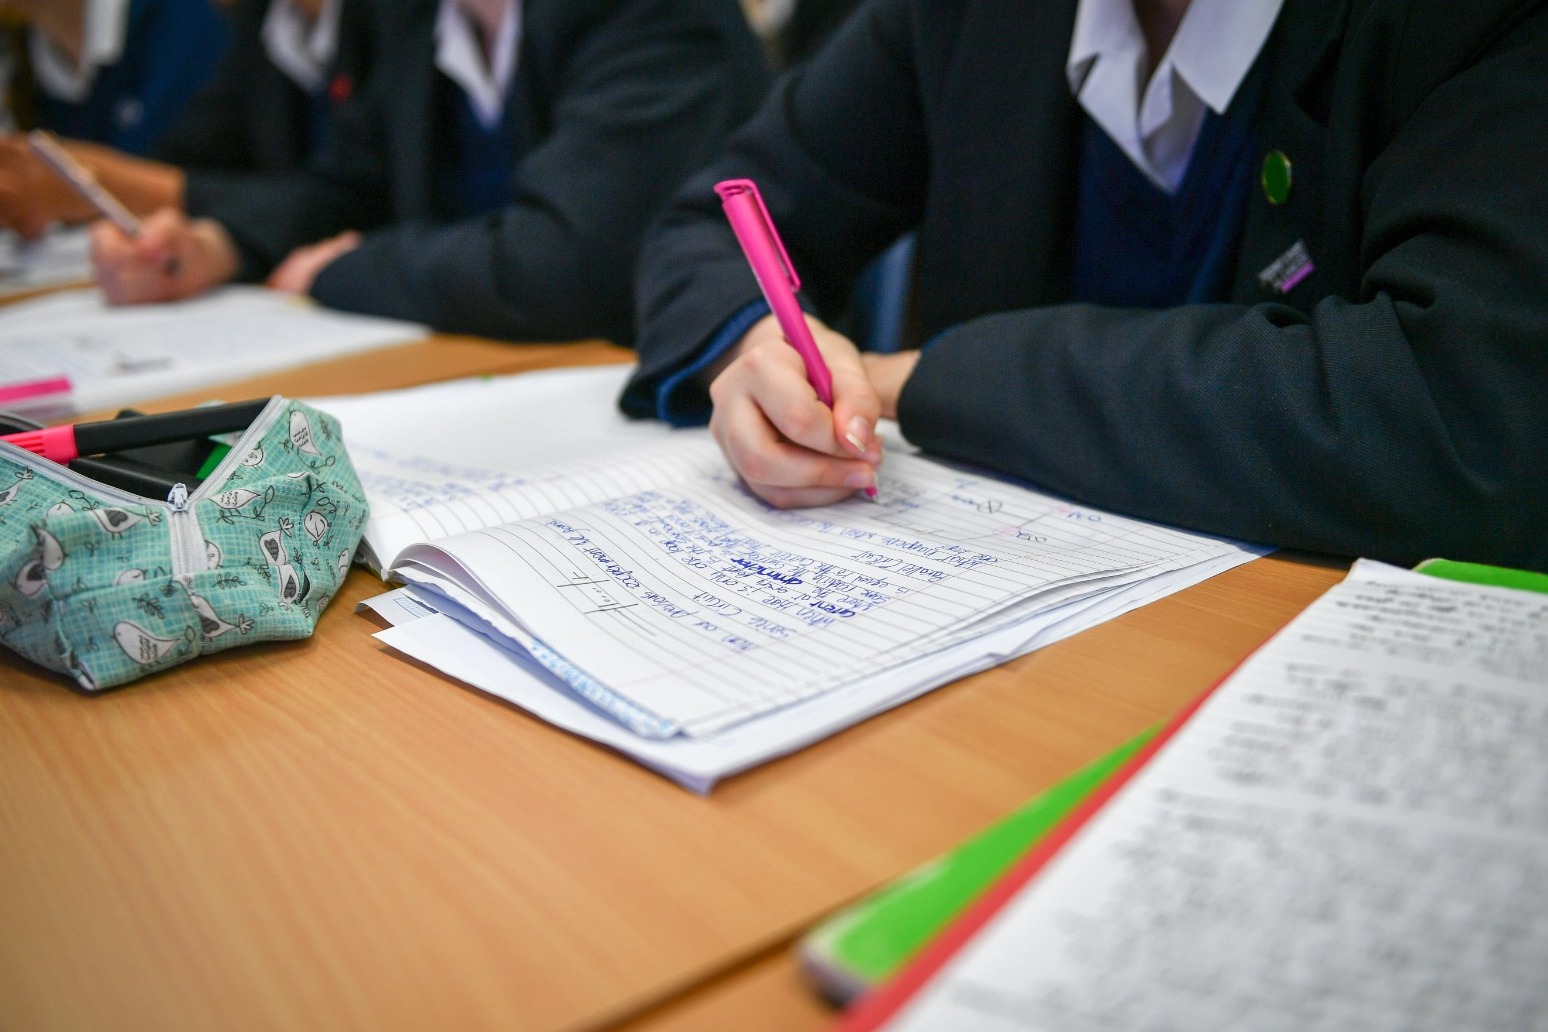 Do not rush to judge schools on lower GCSE grades headteachers union warns